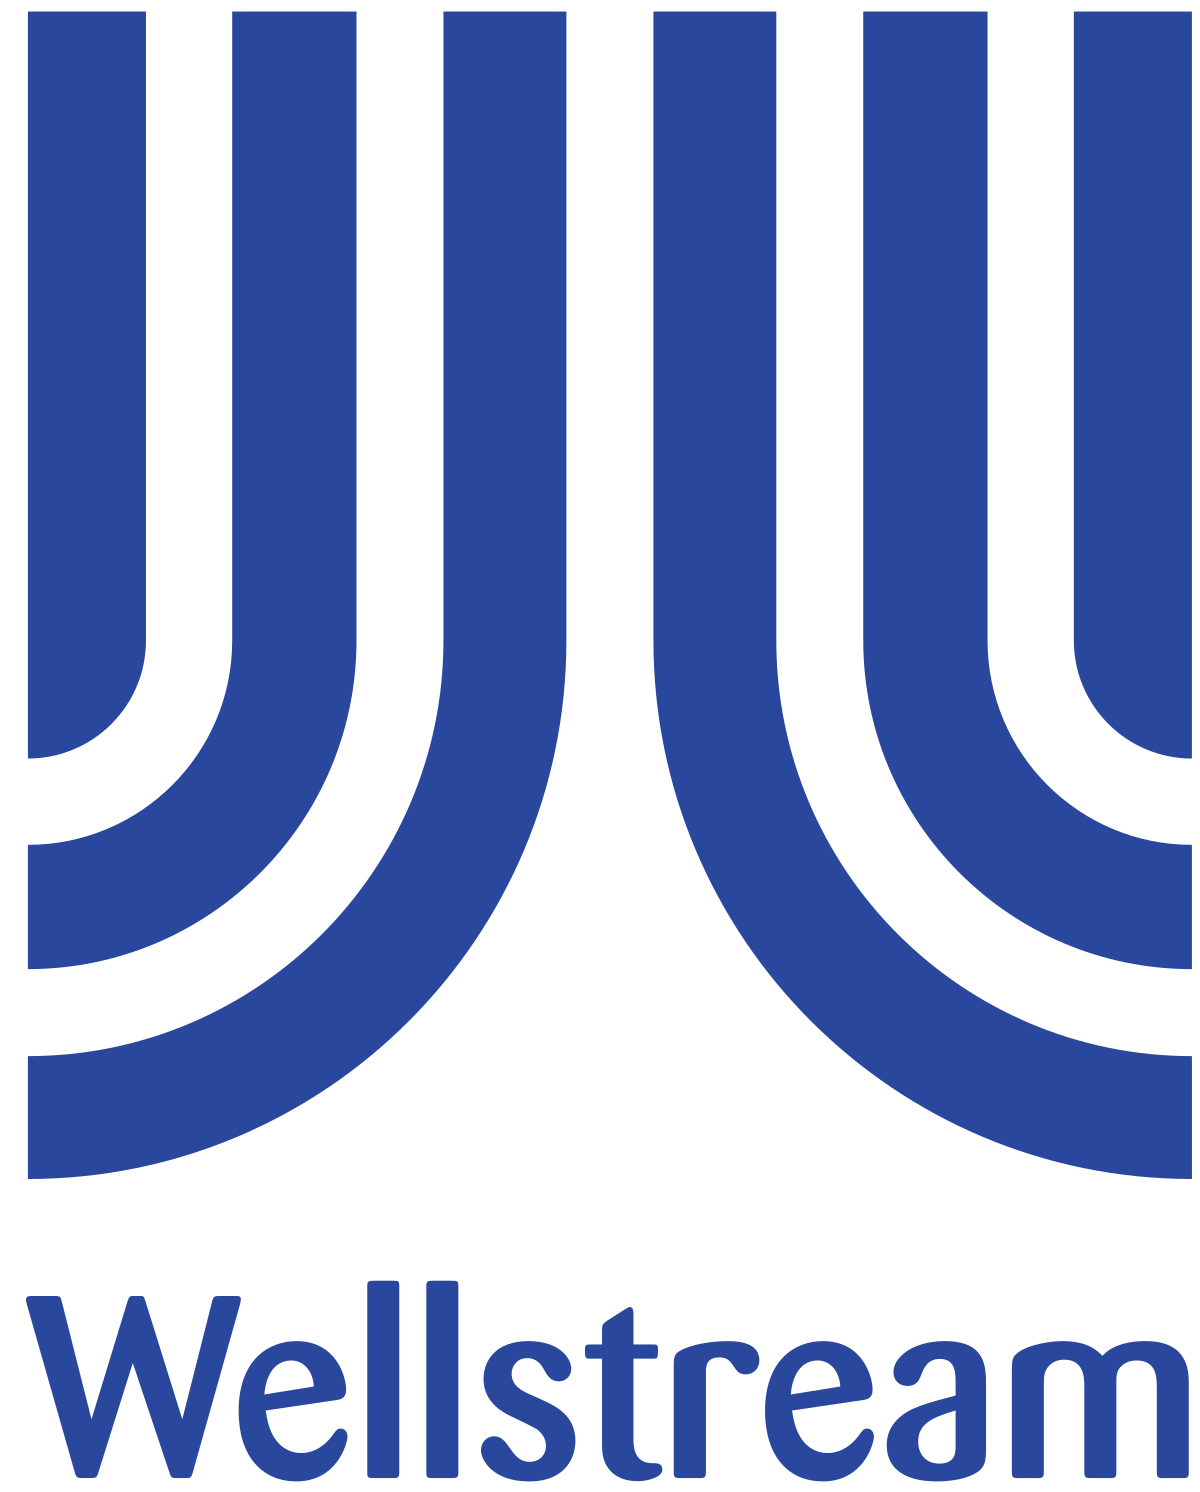 Wellstream Wikipedia